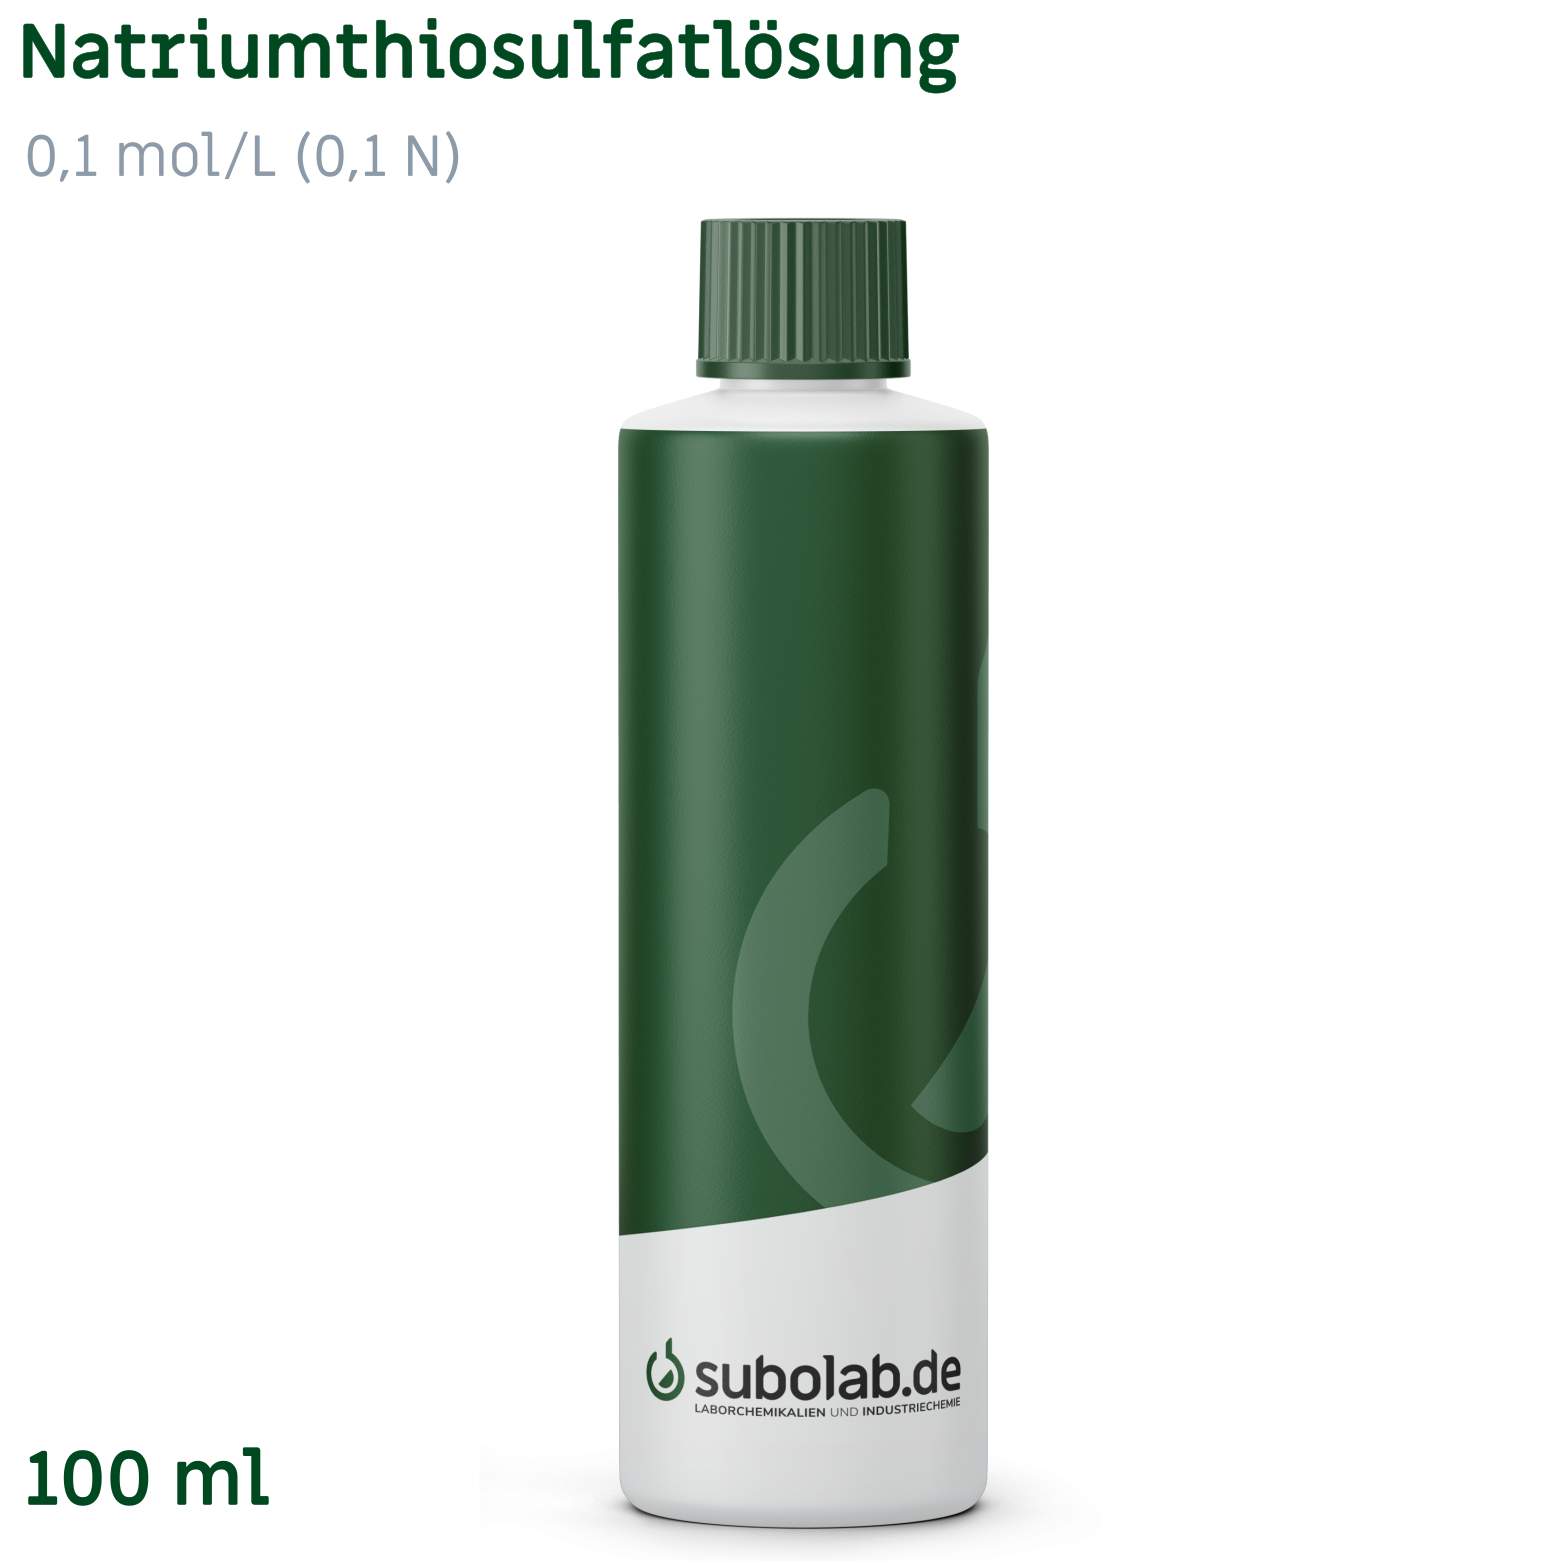 Bild von Natriumthiosulfatlösung 0,1 mol/L (0,1 N) (100 ml)